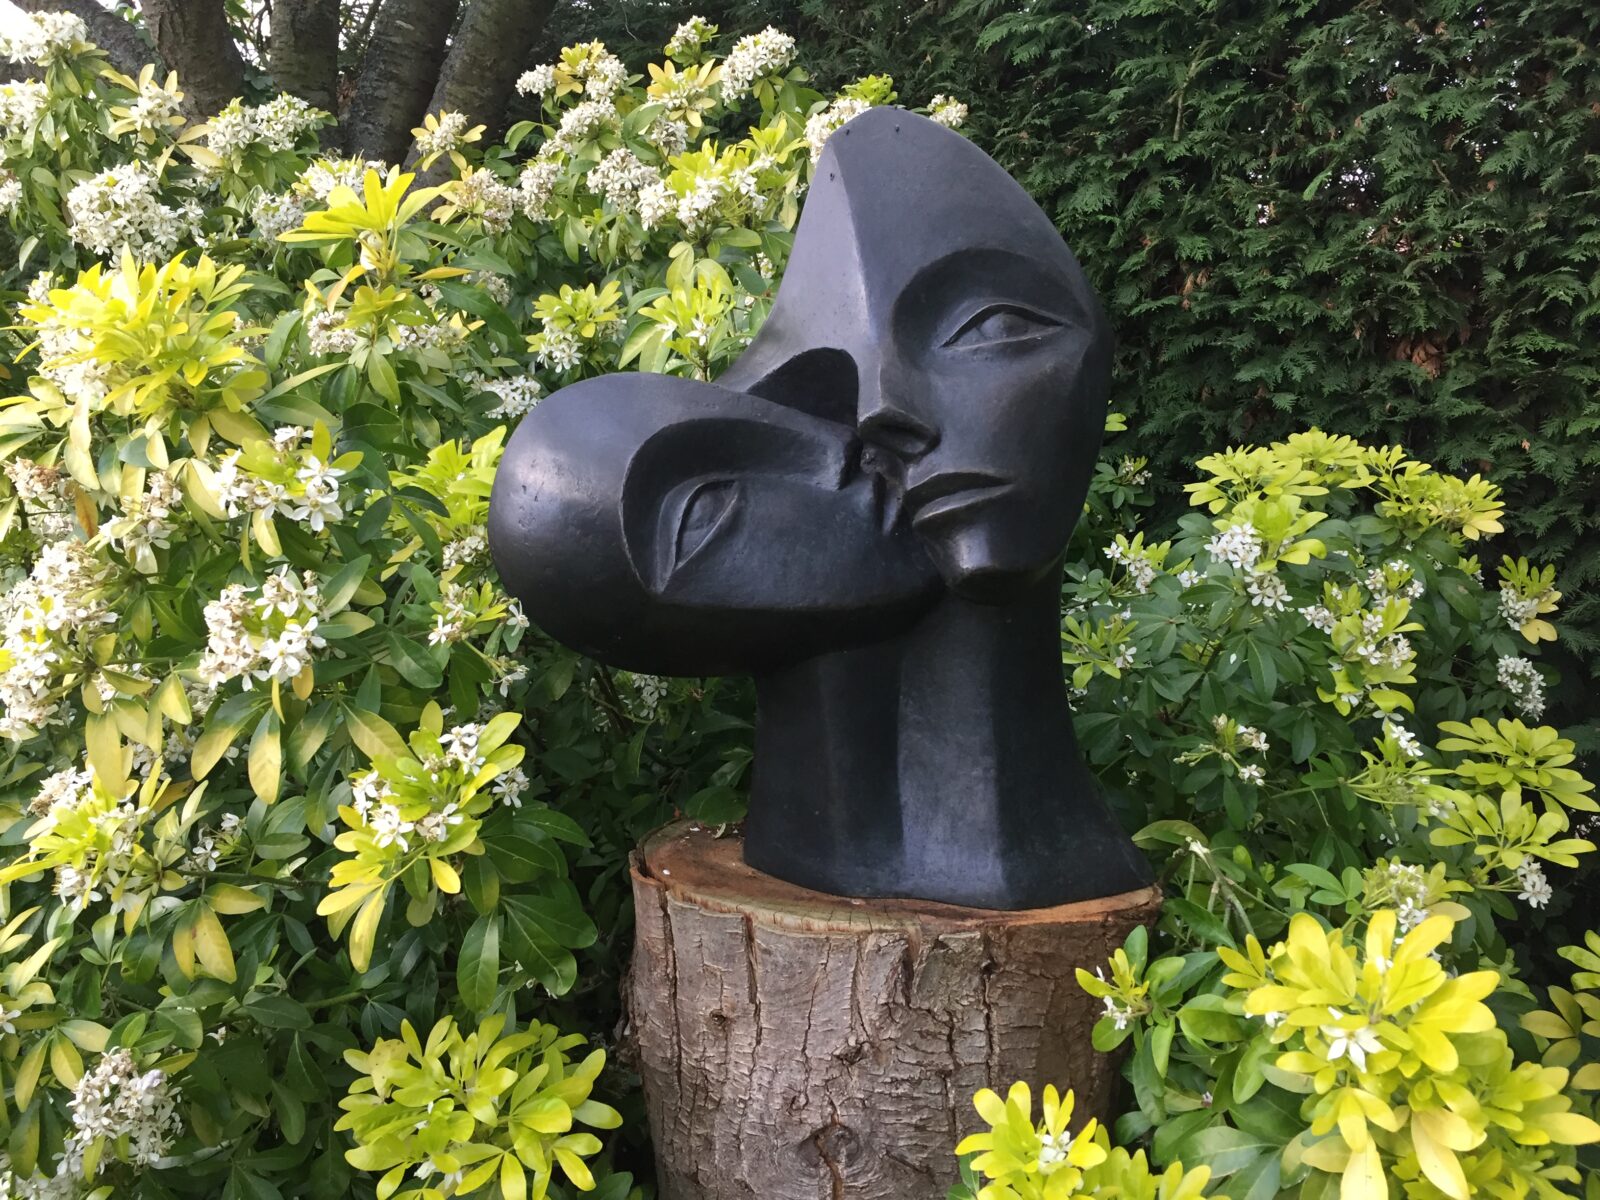 Unique contemporary bronze sculpture of two interlocking heads beside a Choisya bush in the sculptors garden